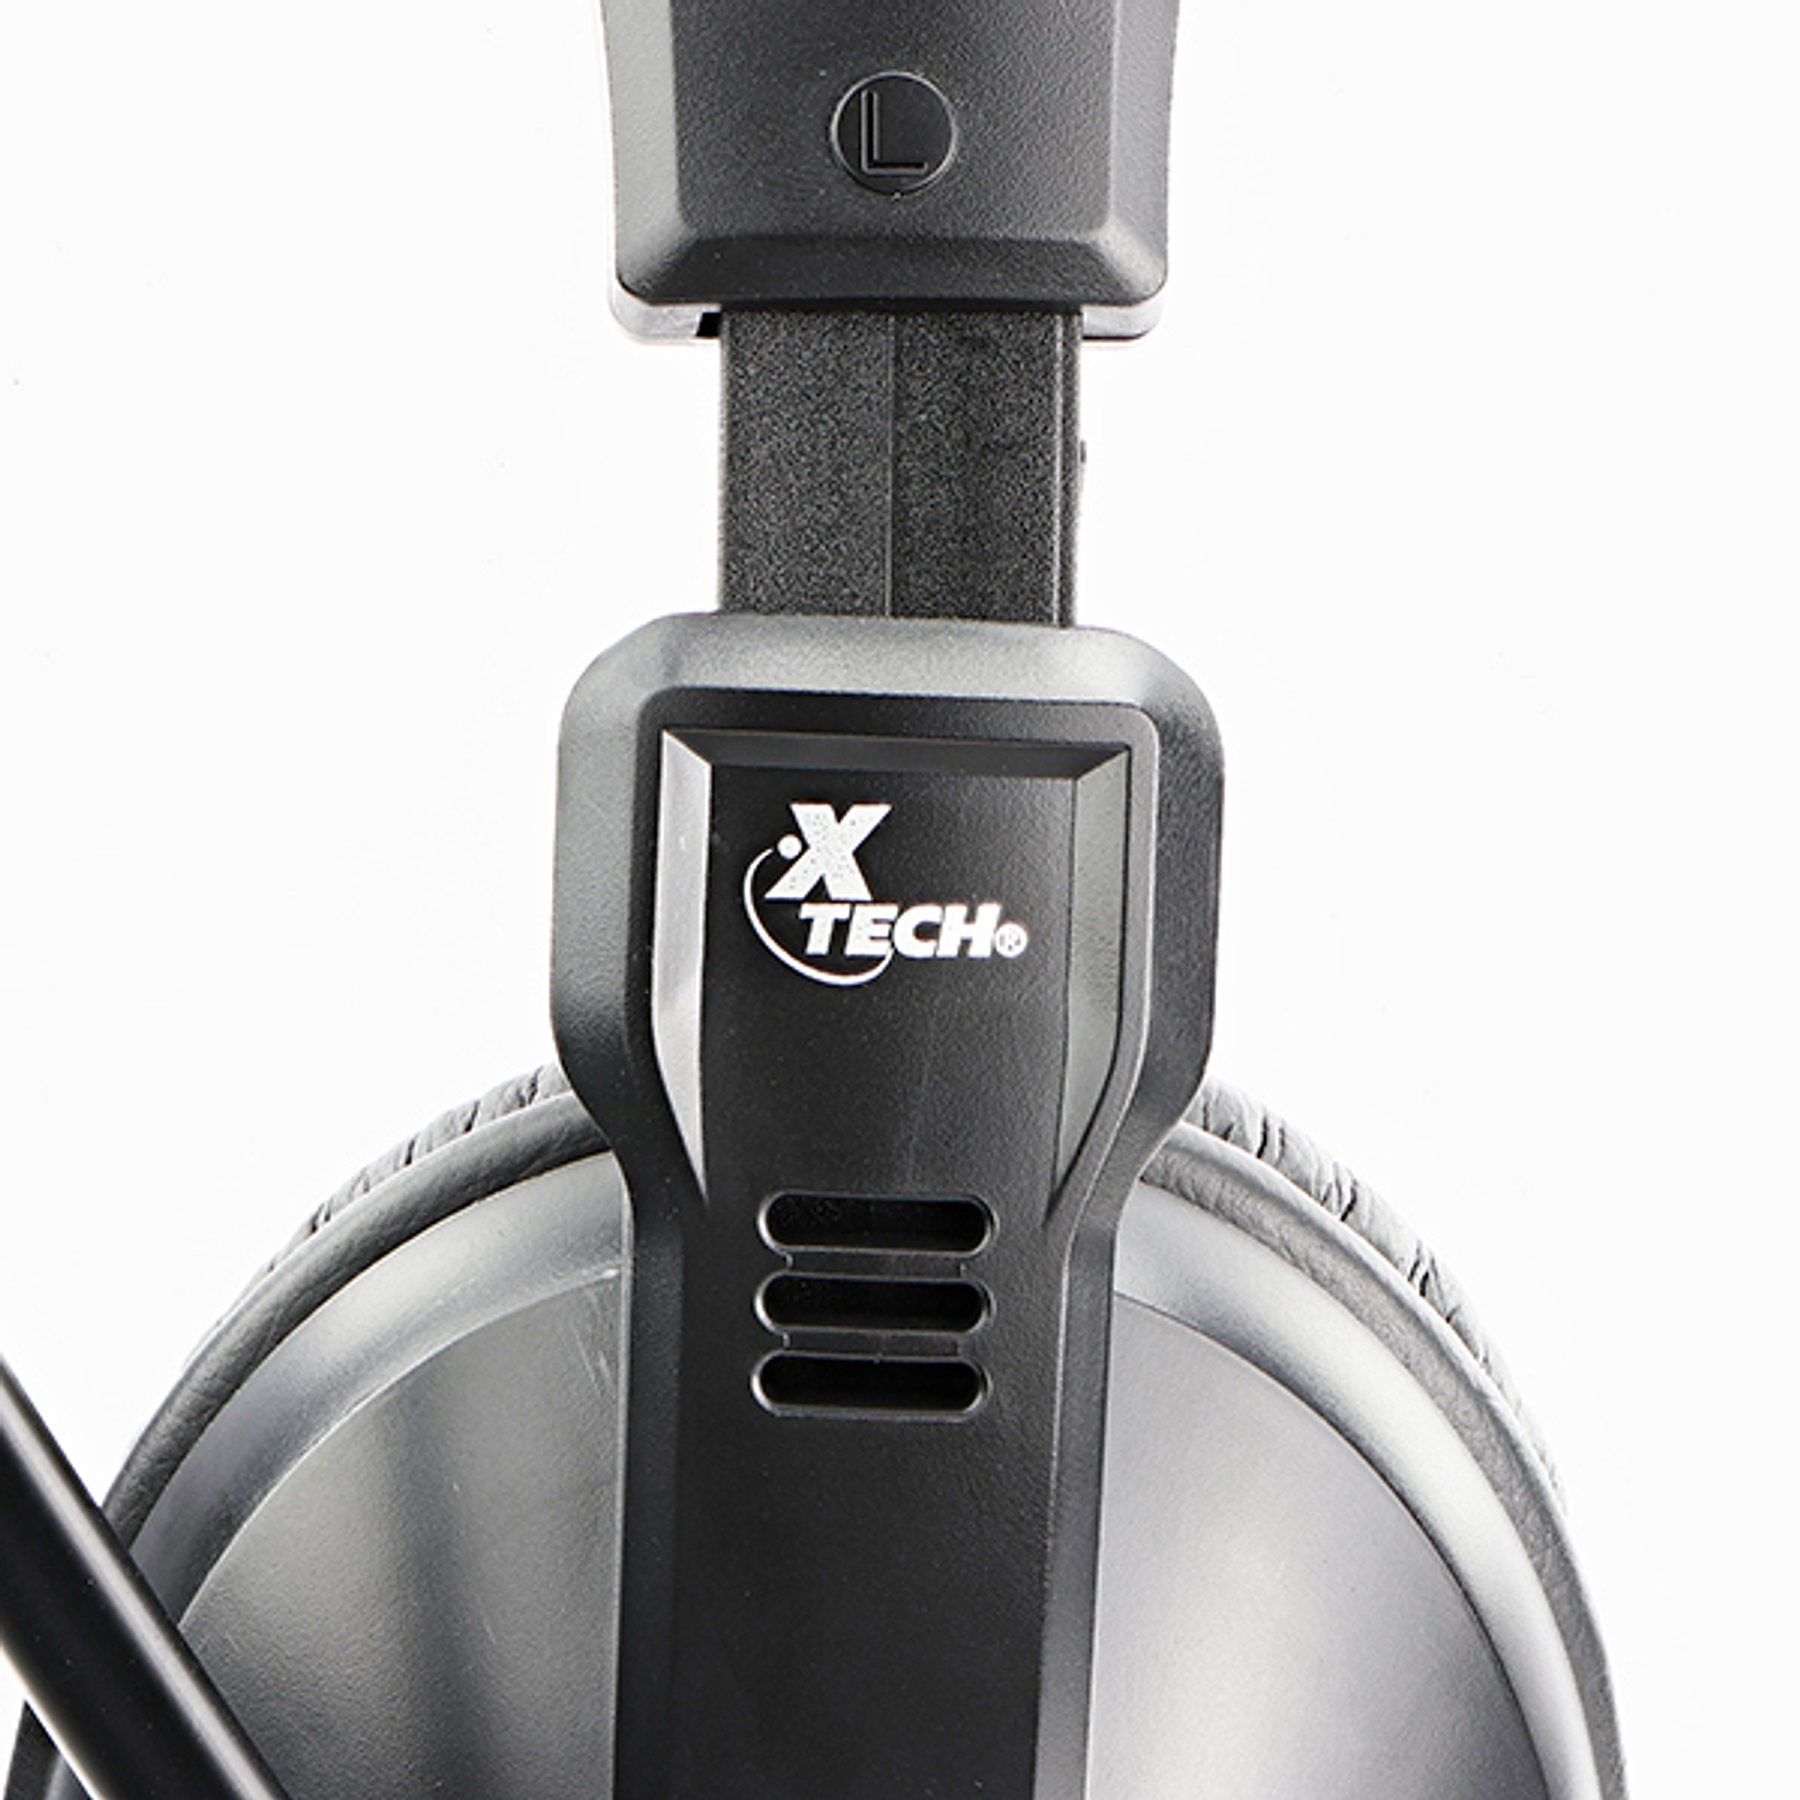 Xtech audifono gaming dual jack3.5mm Control Vol/Mic 